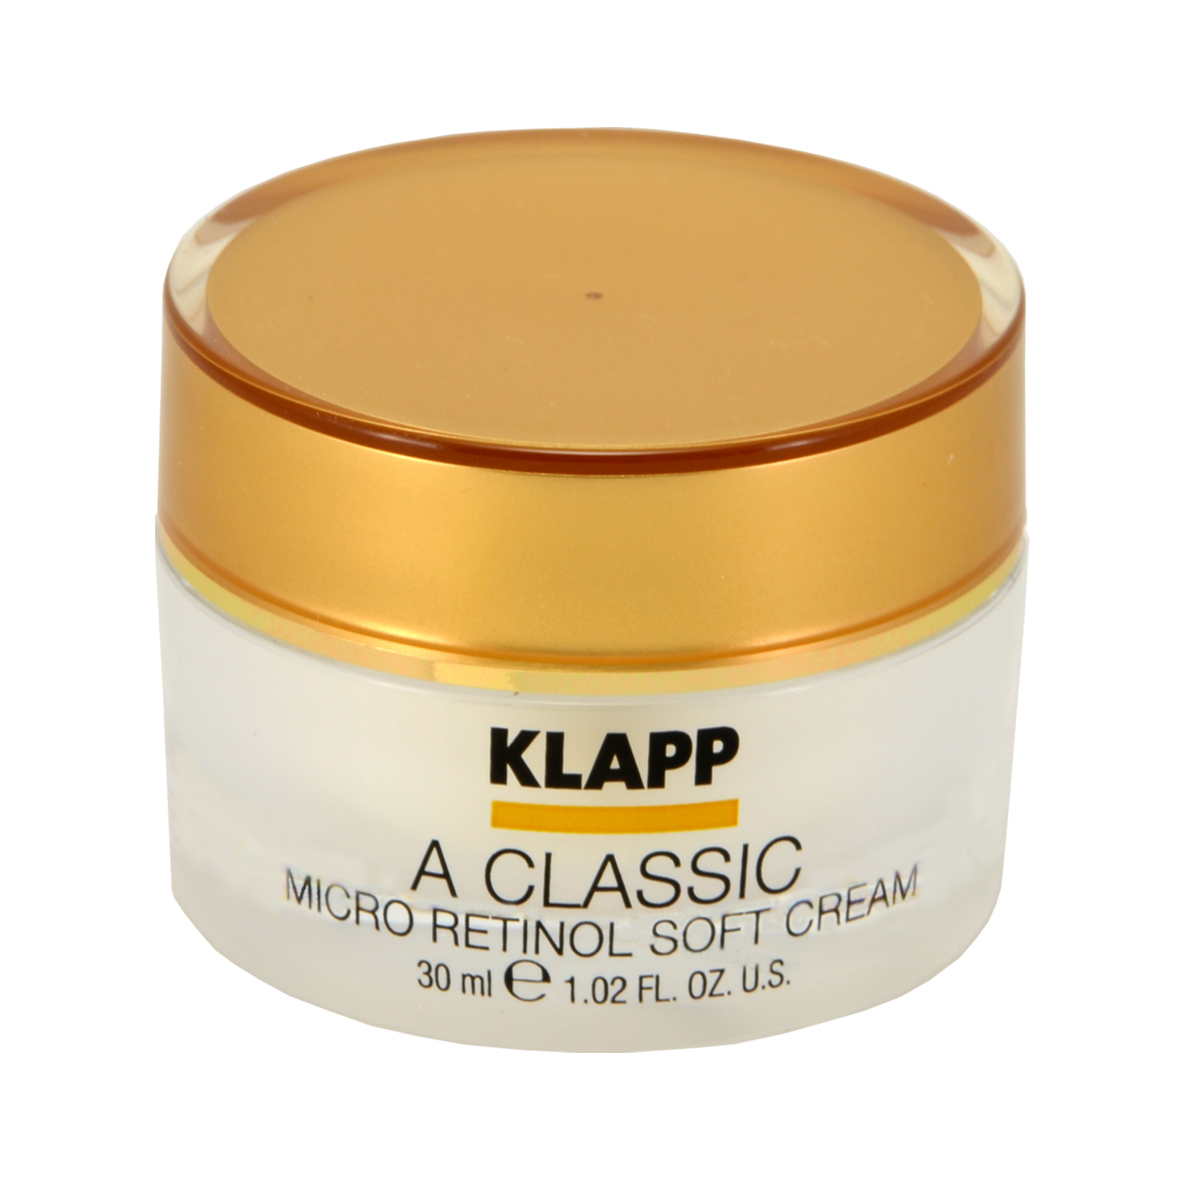 KLAPP Vitamin A Classic Micro Retinol Soft Cream 30 ml